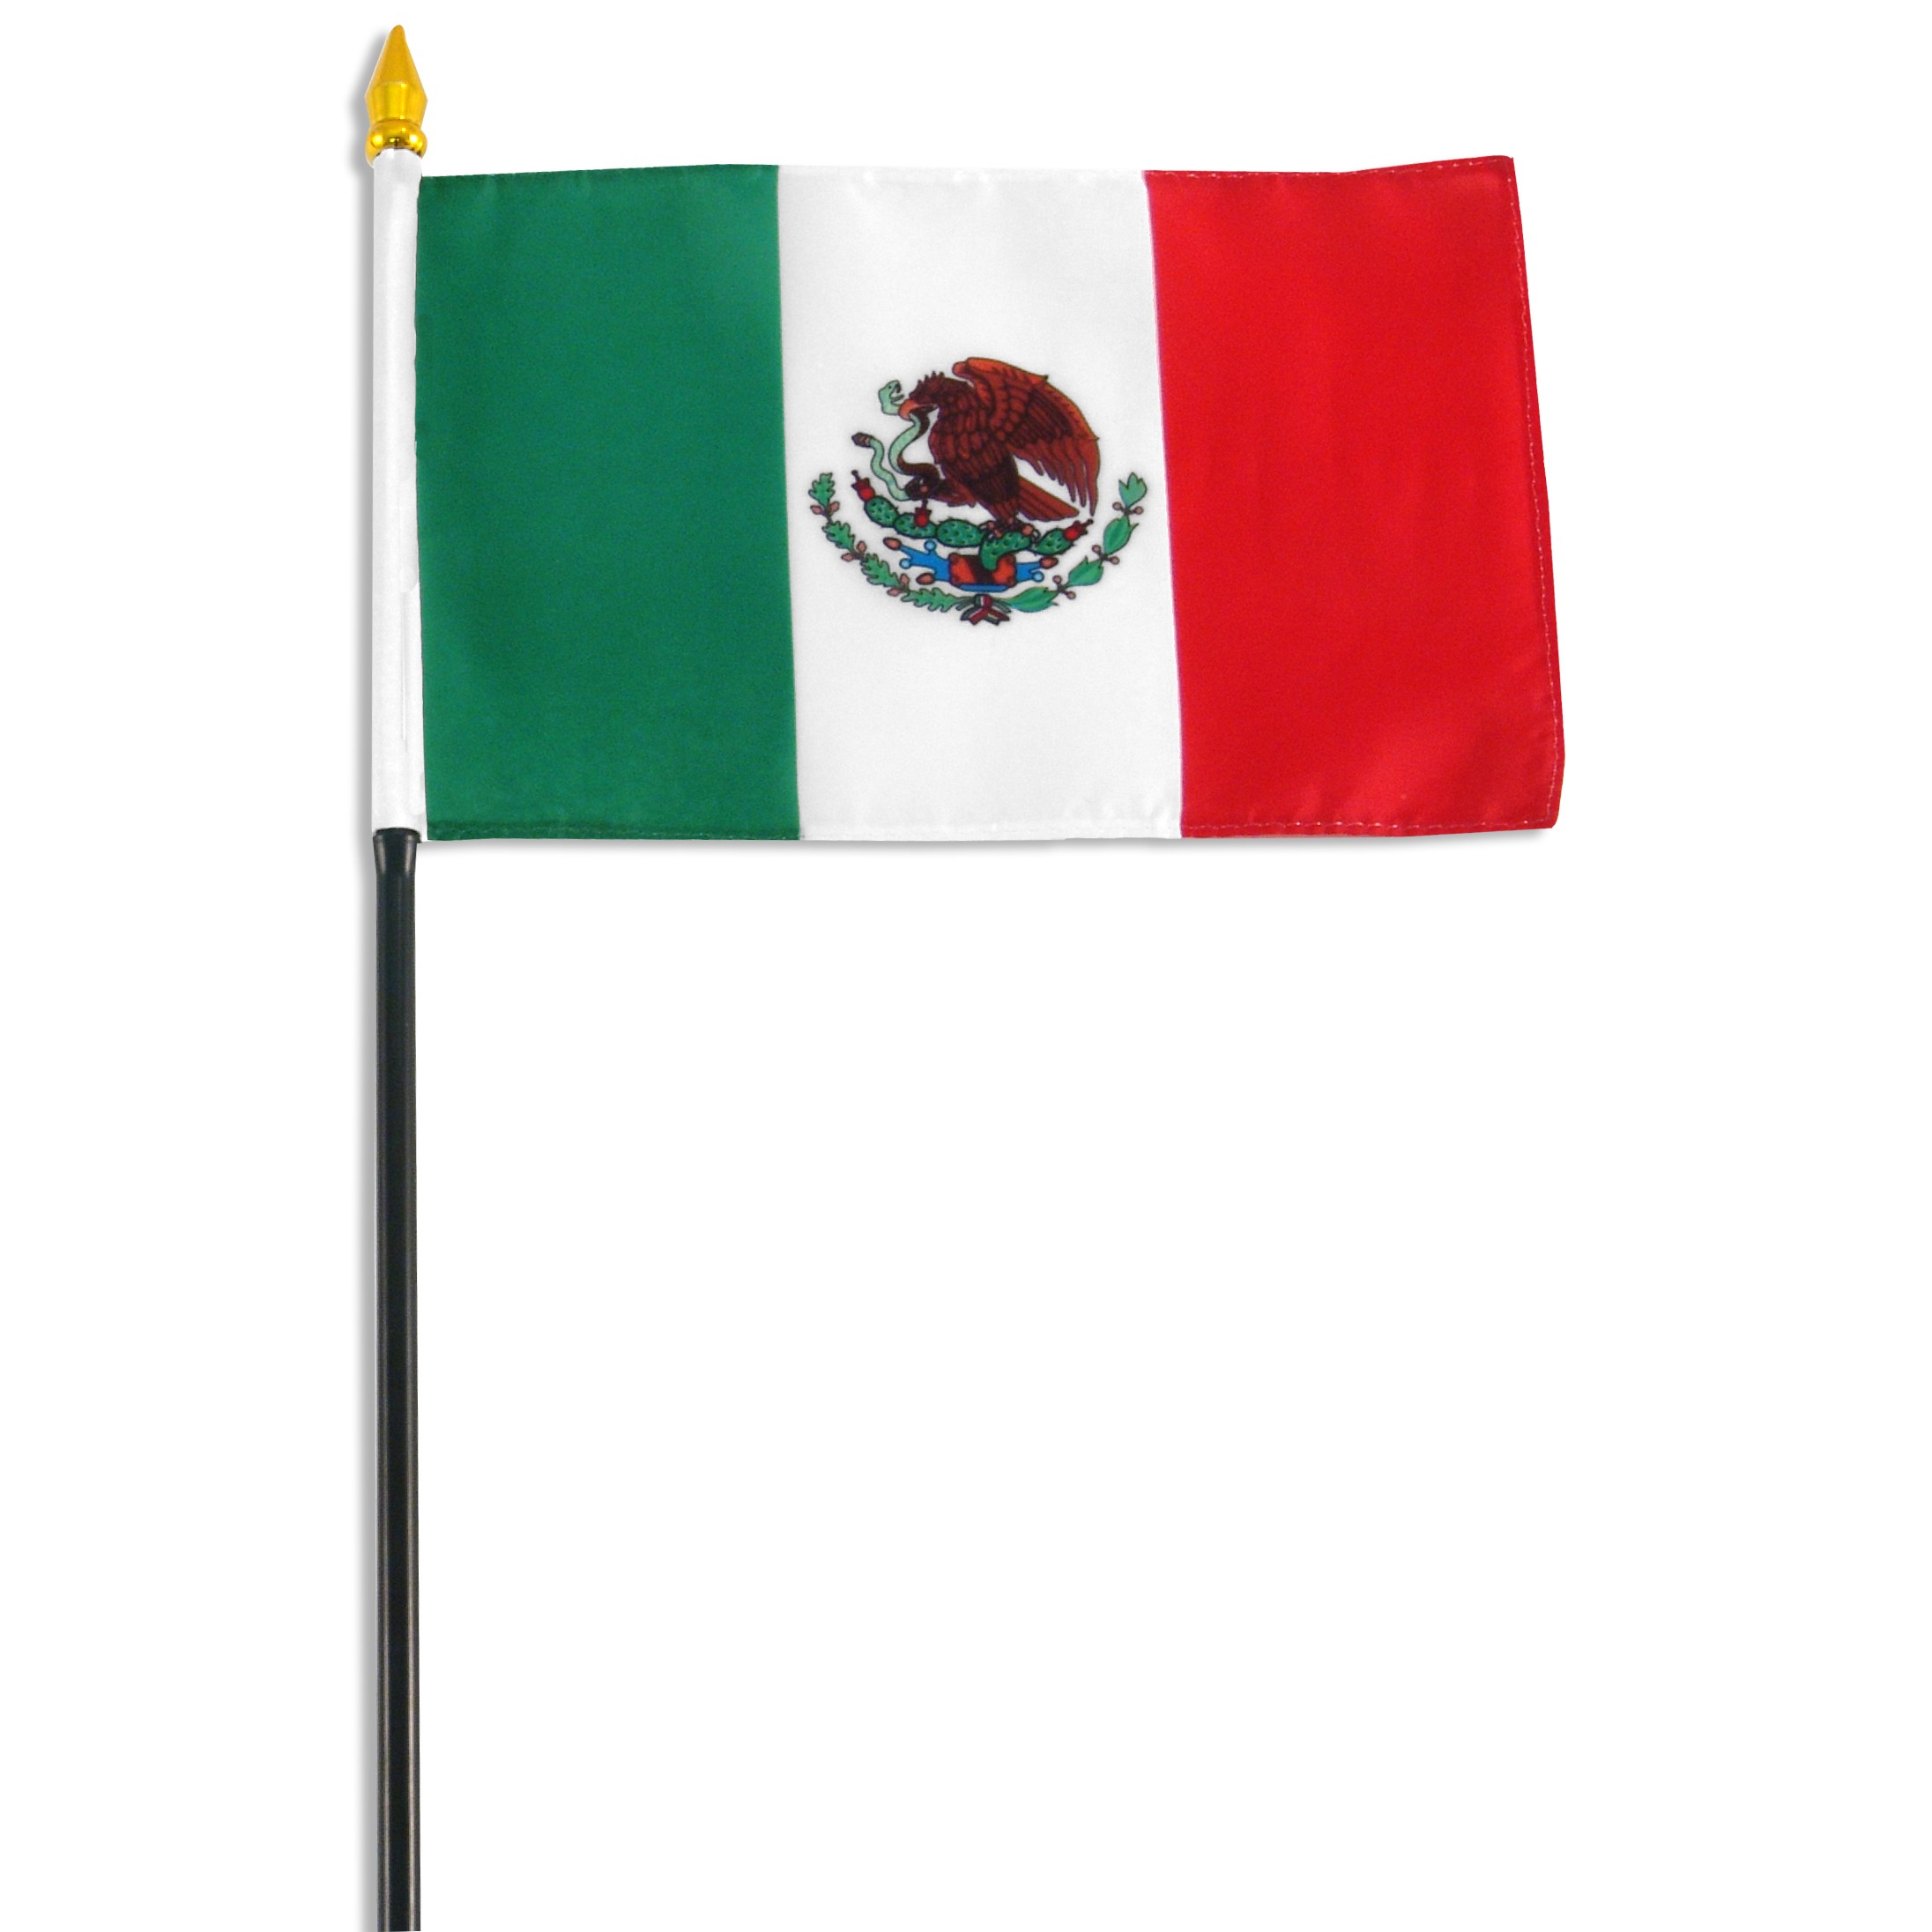 Clipart mexico flag